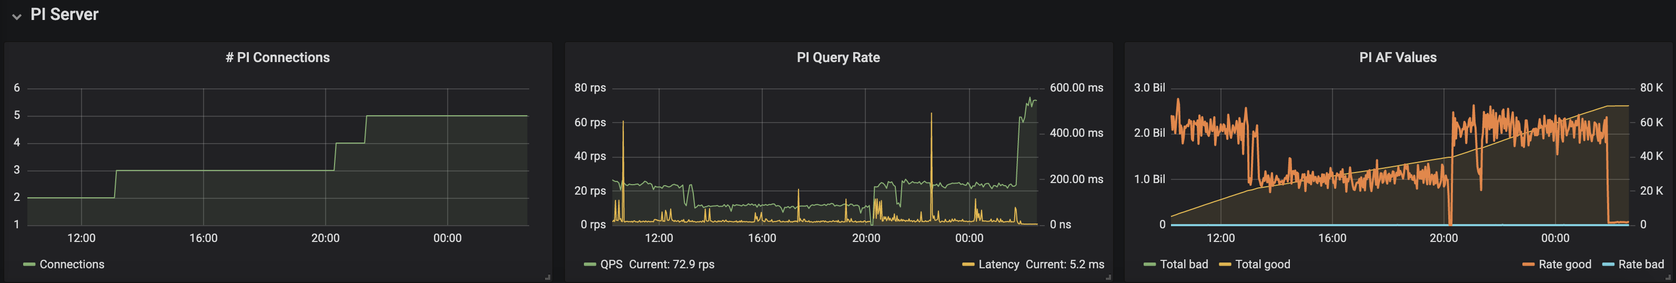 PI server metrics